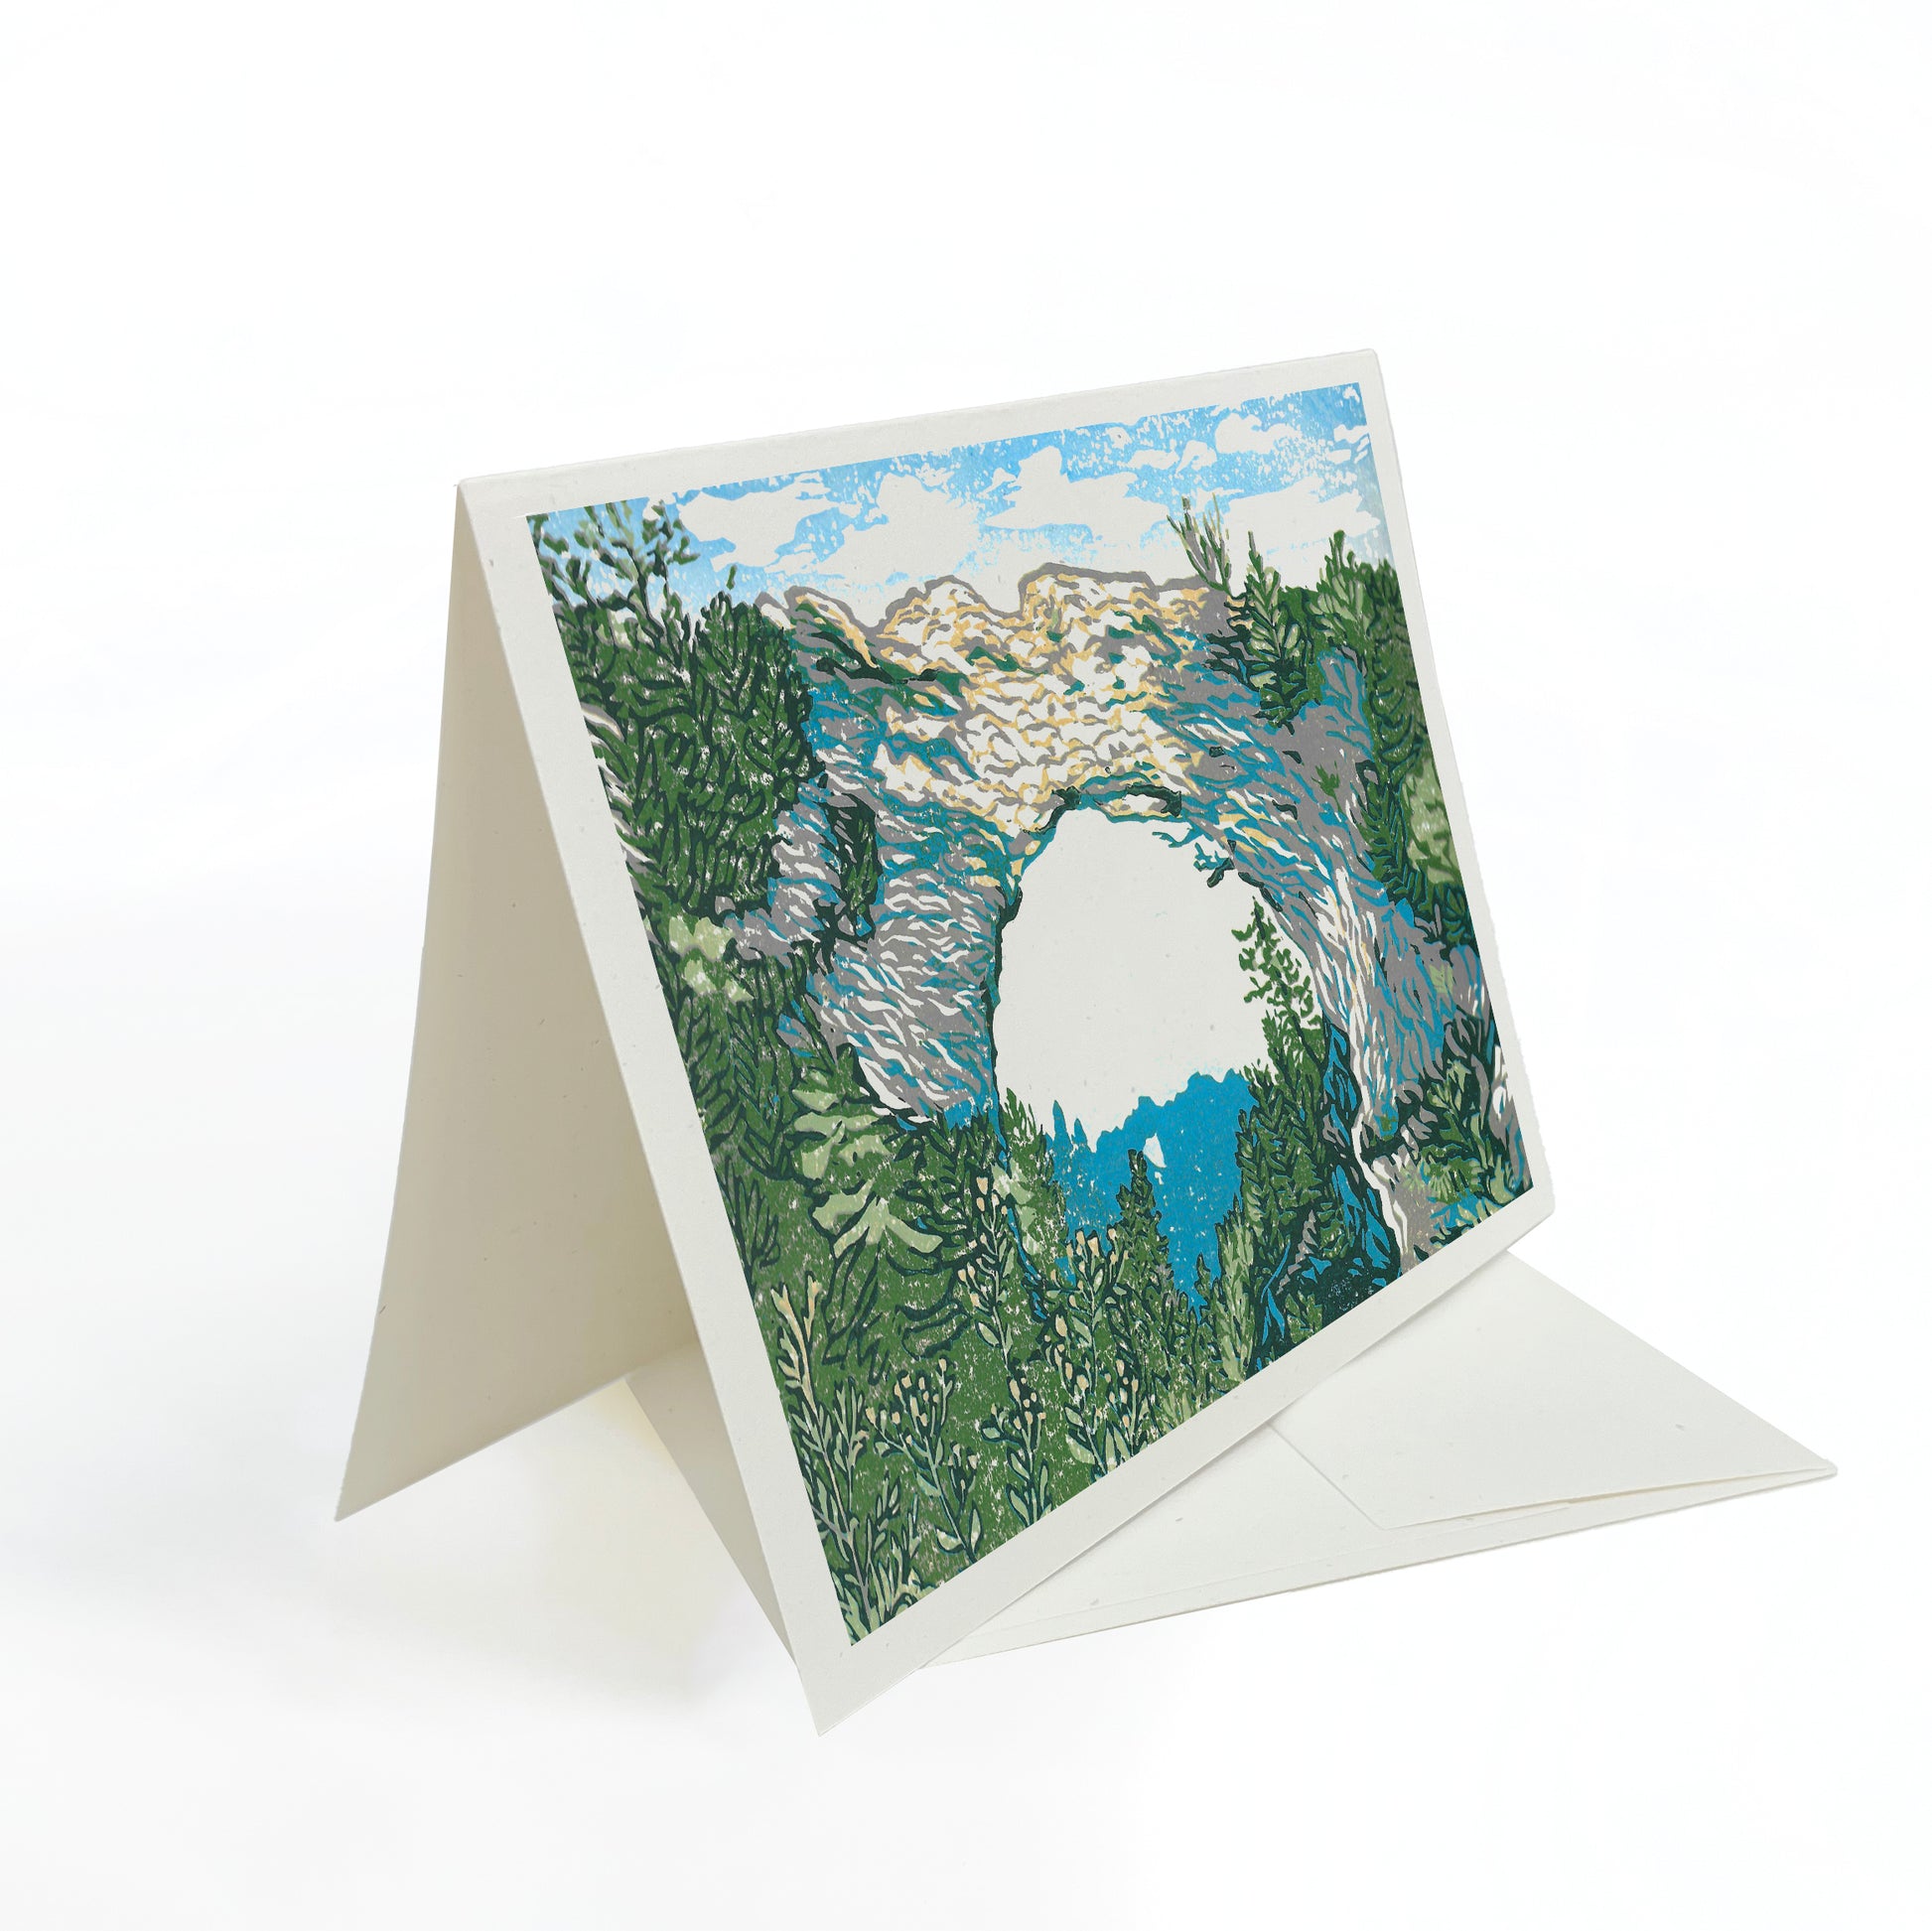 Arch Rock's Shadow Greeting Card by Natalia Wohletz of Peninsula Prints, Mackinac Island.